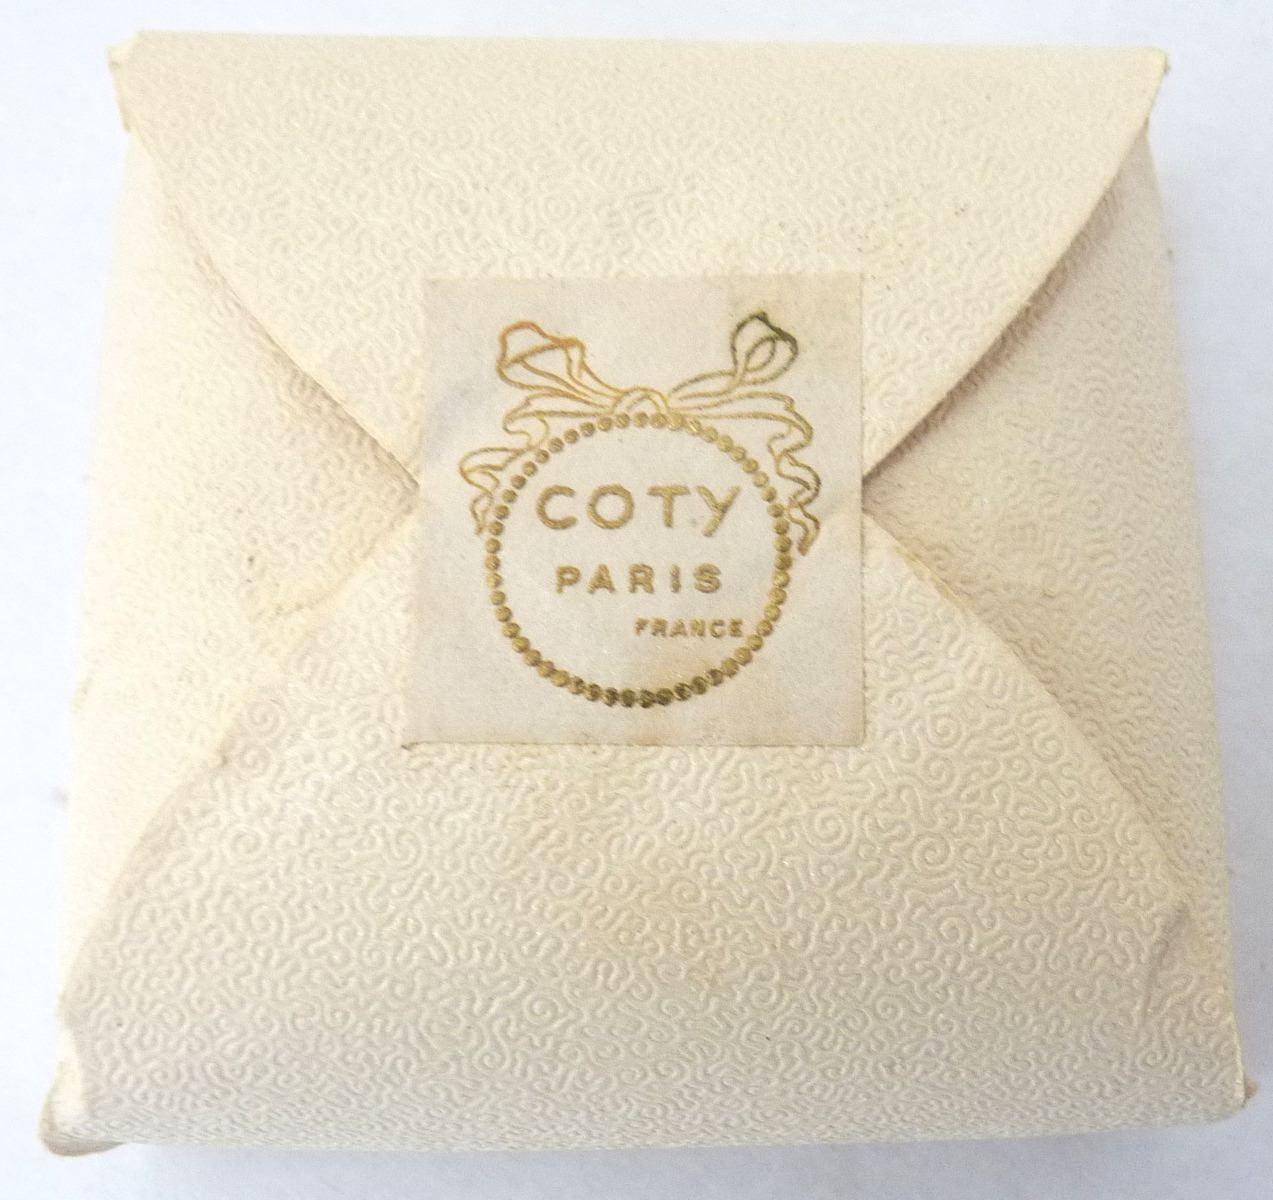 Emballage savon fin “Chypre” de Coty